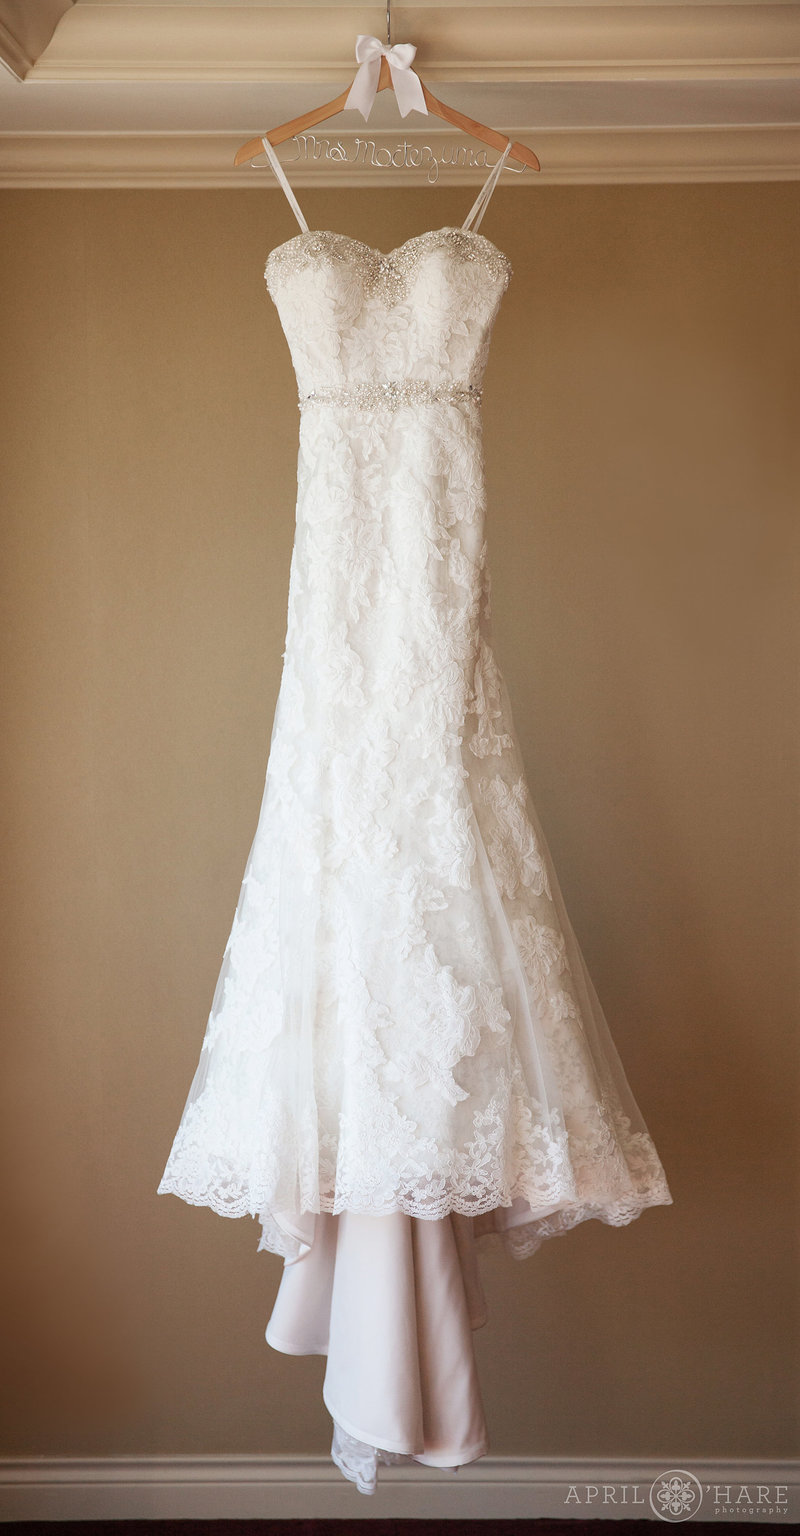 Little-White-Dress-Shop-Justin-Alexander-Bridal-Gown-April-O'Hare-Photography-Denver-CO-6